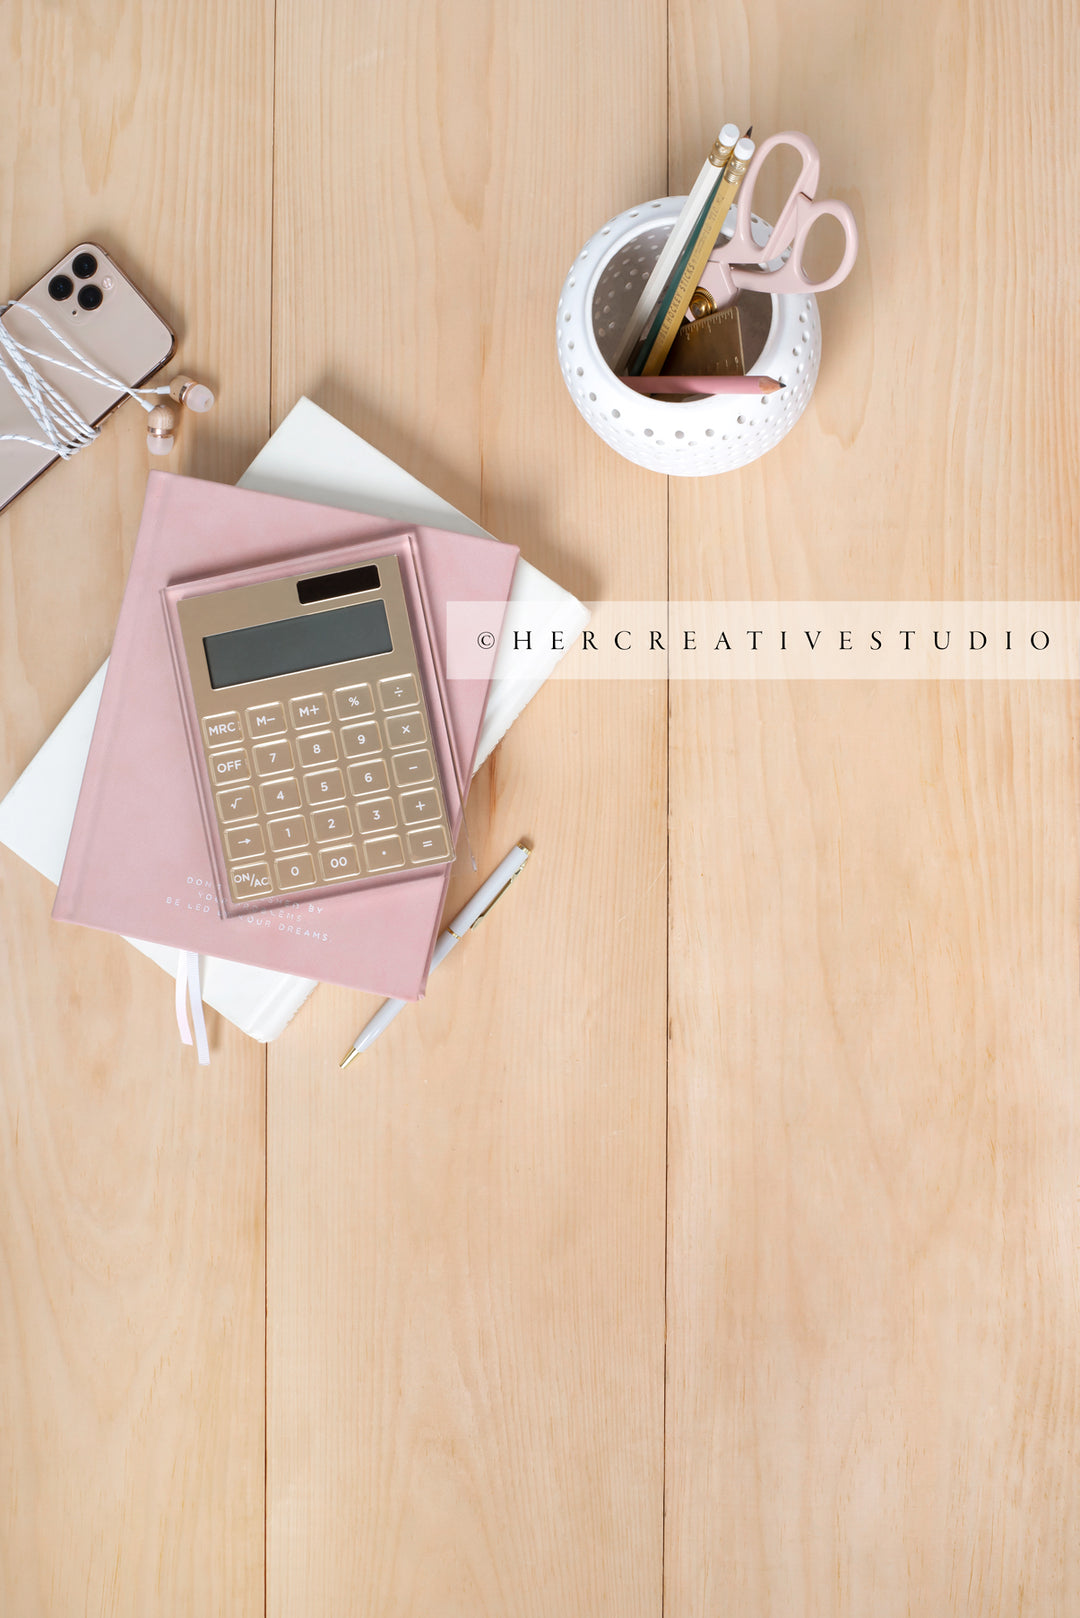 Calculator, Smartphone & Pencil Holder on Light Wood Floor, Styled Stock Image